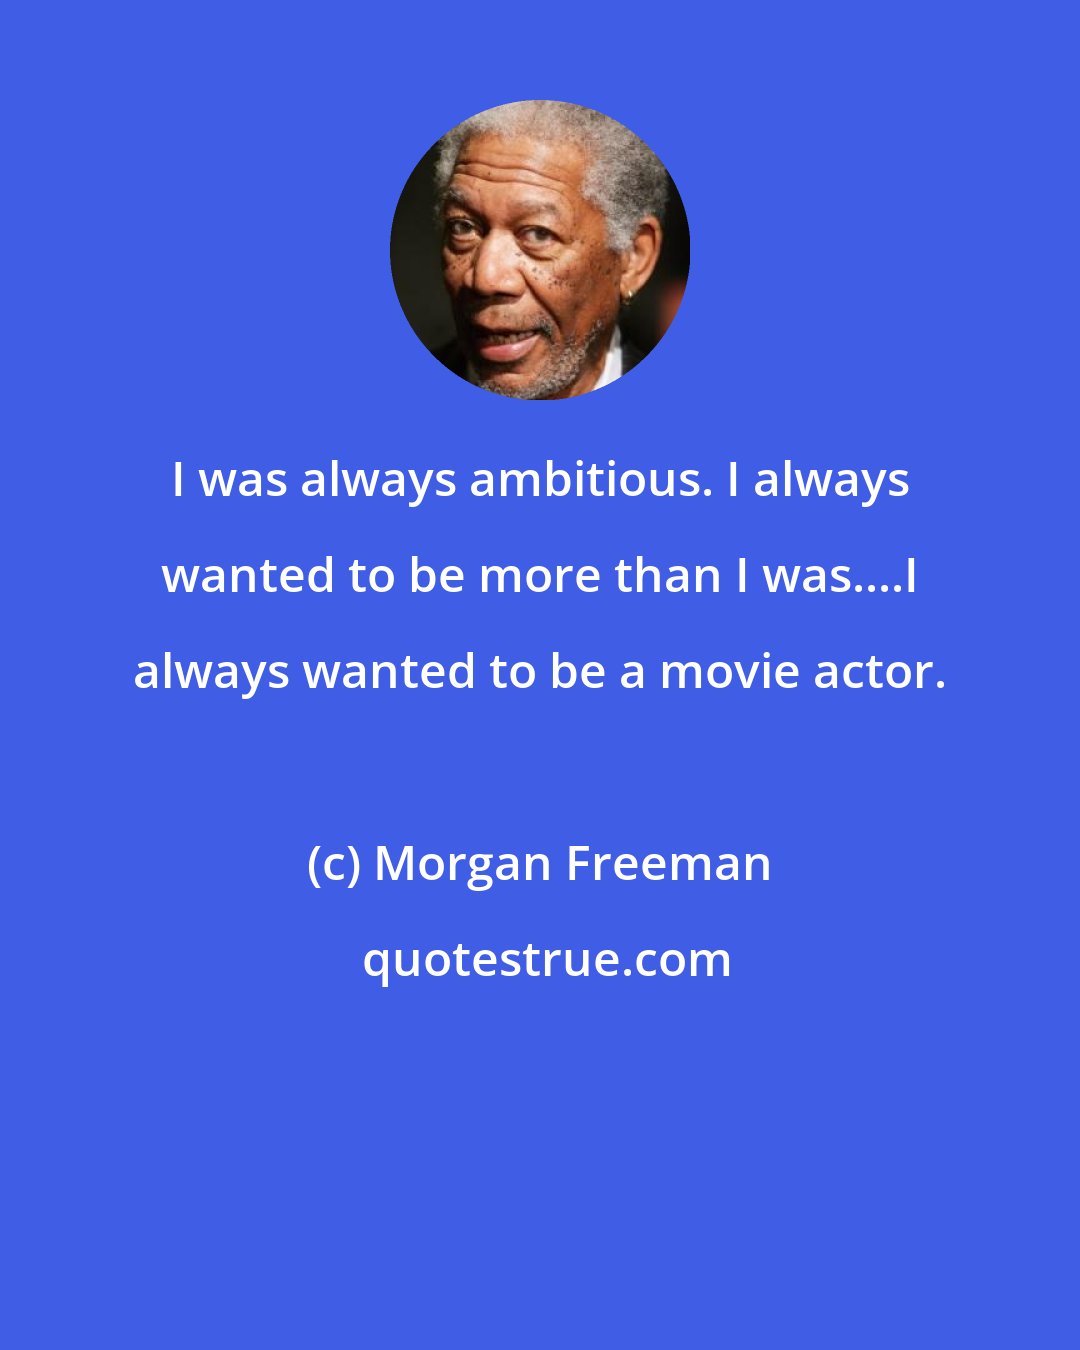 Morgan Freeman: I was always ambitious. I always wanted to be more than I was....I always wanted to be a movie actor.